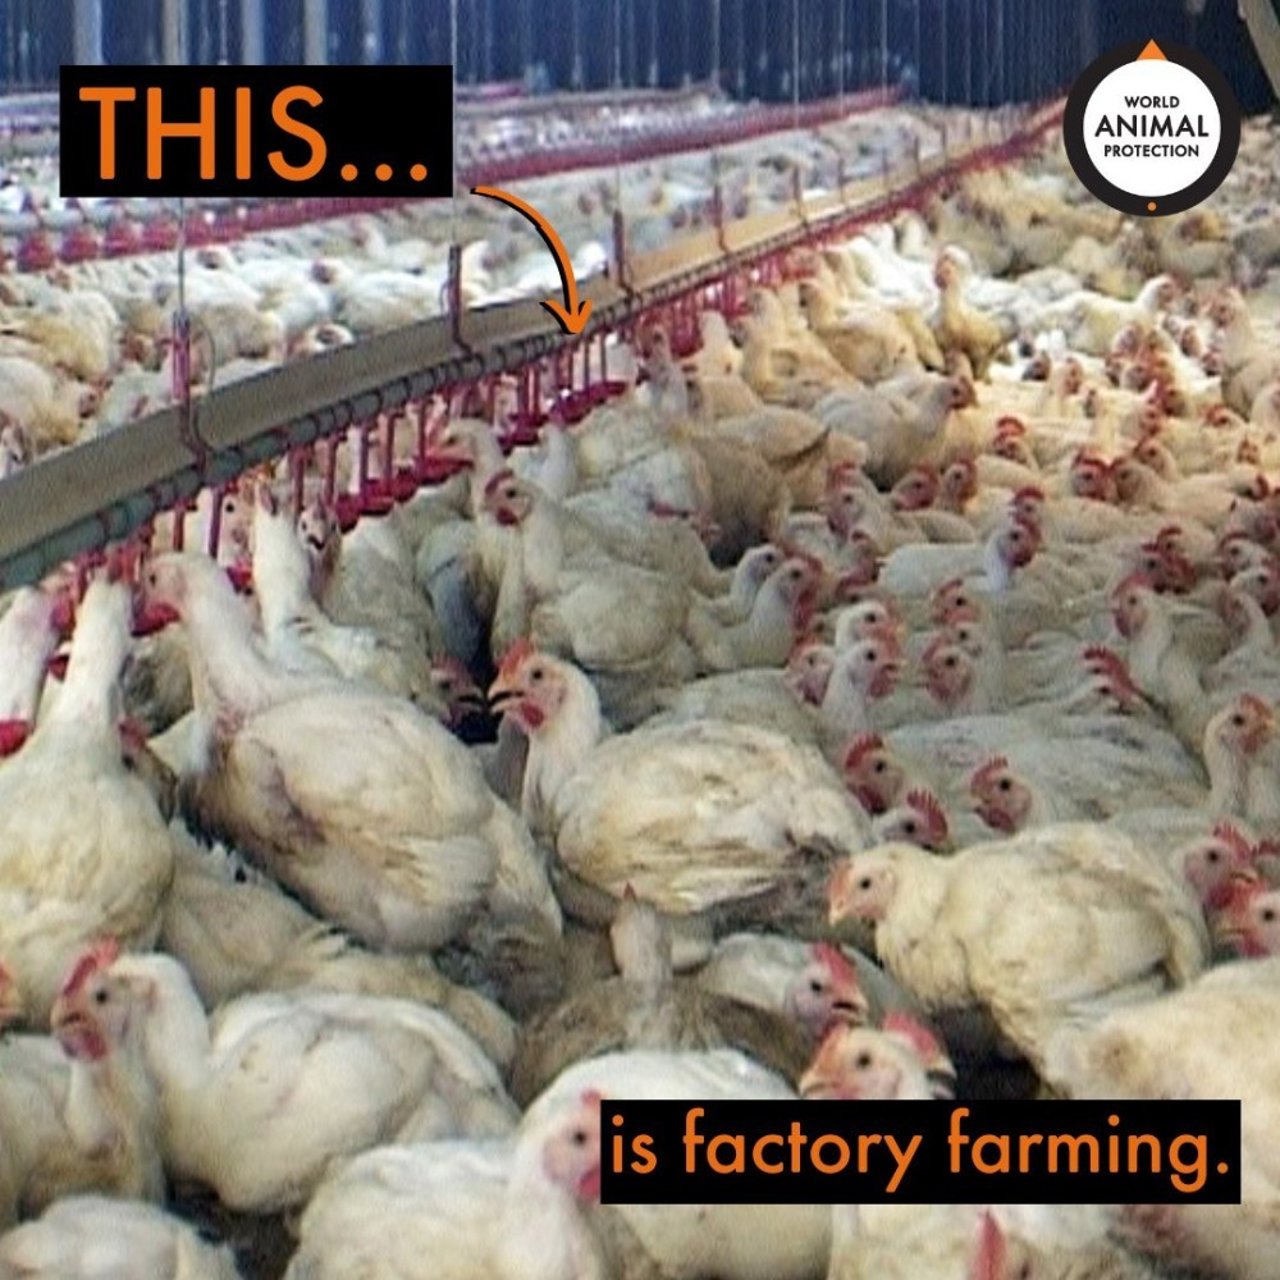 Factory farming is cruel